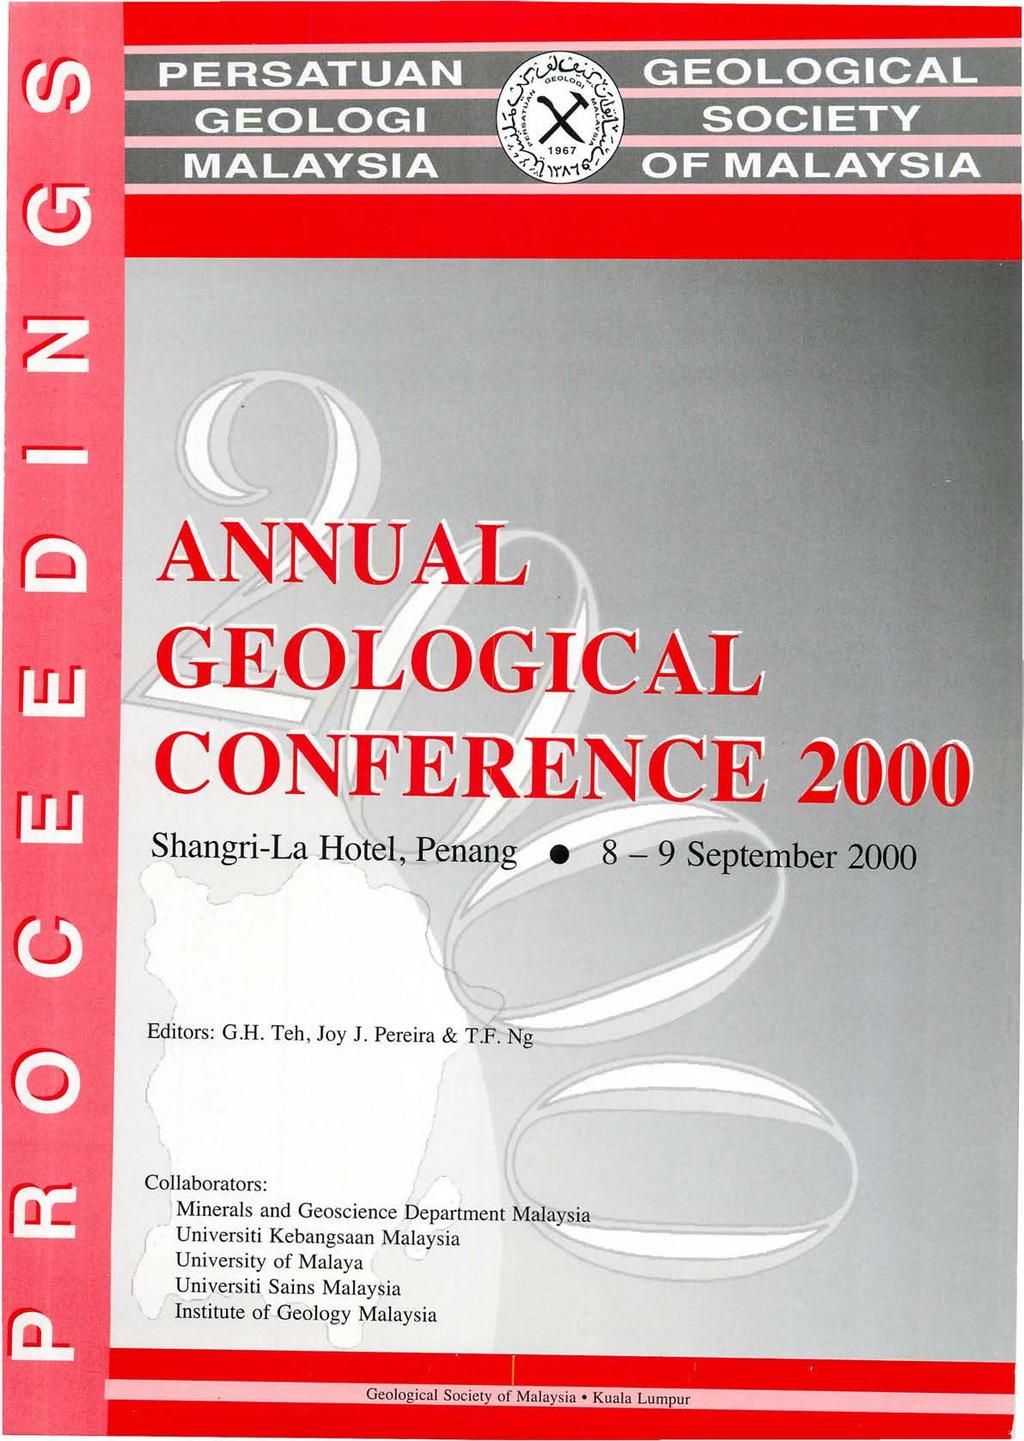 Shangri-La Hotel, Penang 8-9 September 2000 Editors: G.H. Teh, Joy J. Pereira & T.F.